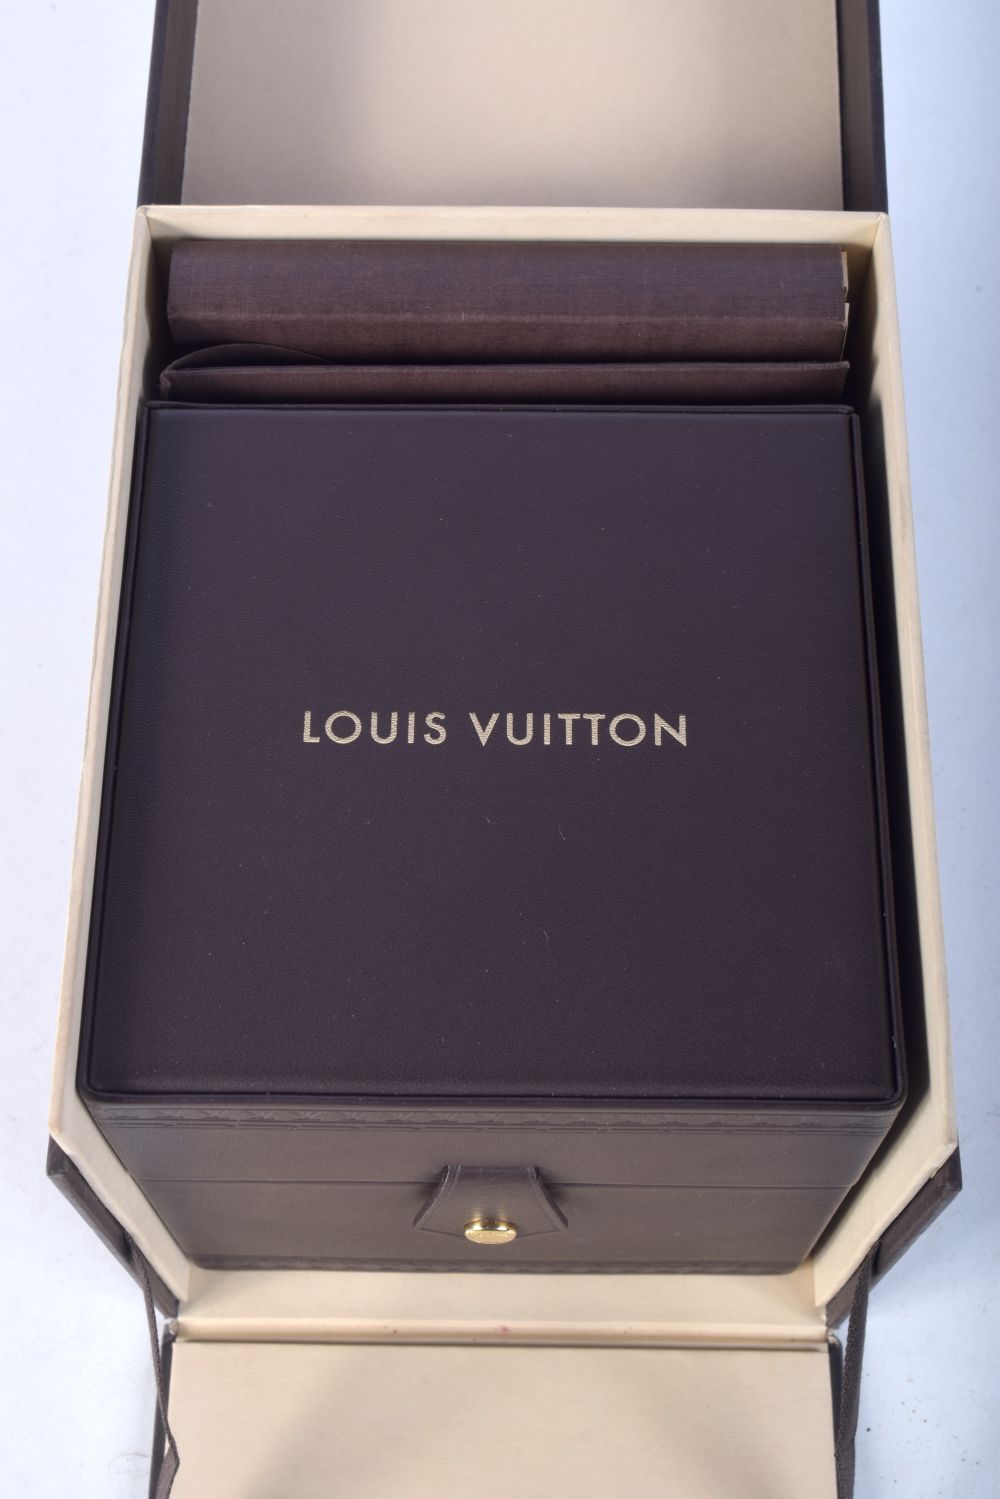 A BOXED LOUIS VUITTON WATCH. 4.5 cm inc crown. - Image 5 of 5